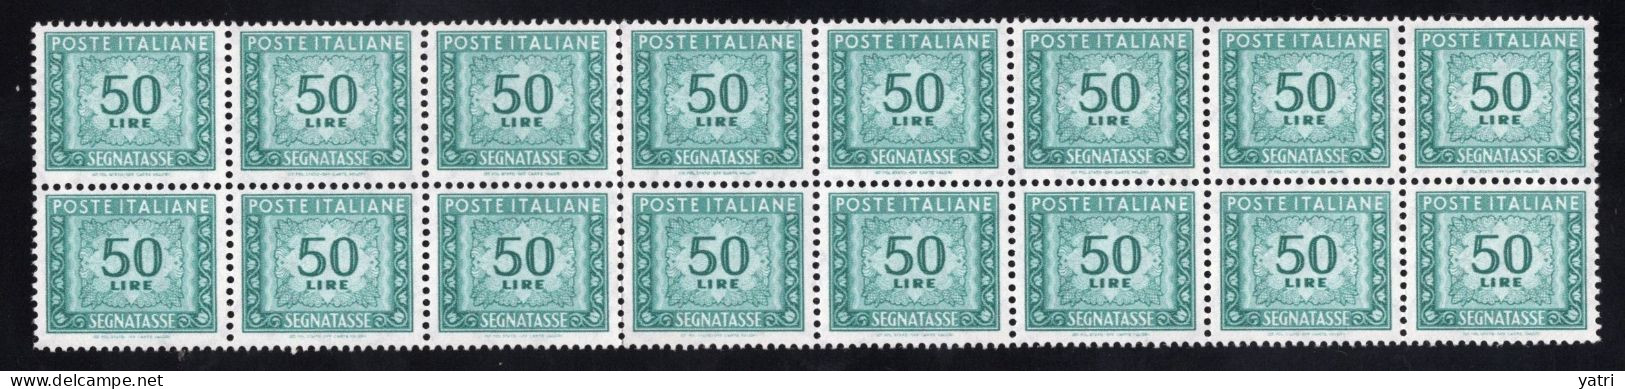 Italia (1962) - Segnatasse, 50 Lire Fil. Stelle 4° Tipo, Gomma Arabica, Sass. 118/II ** - Postage Due